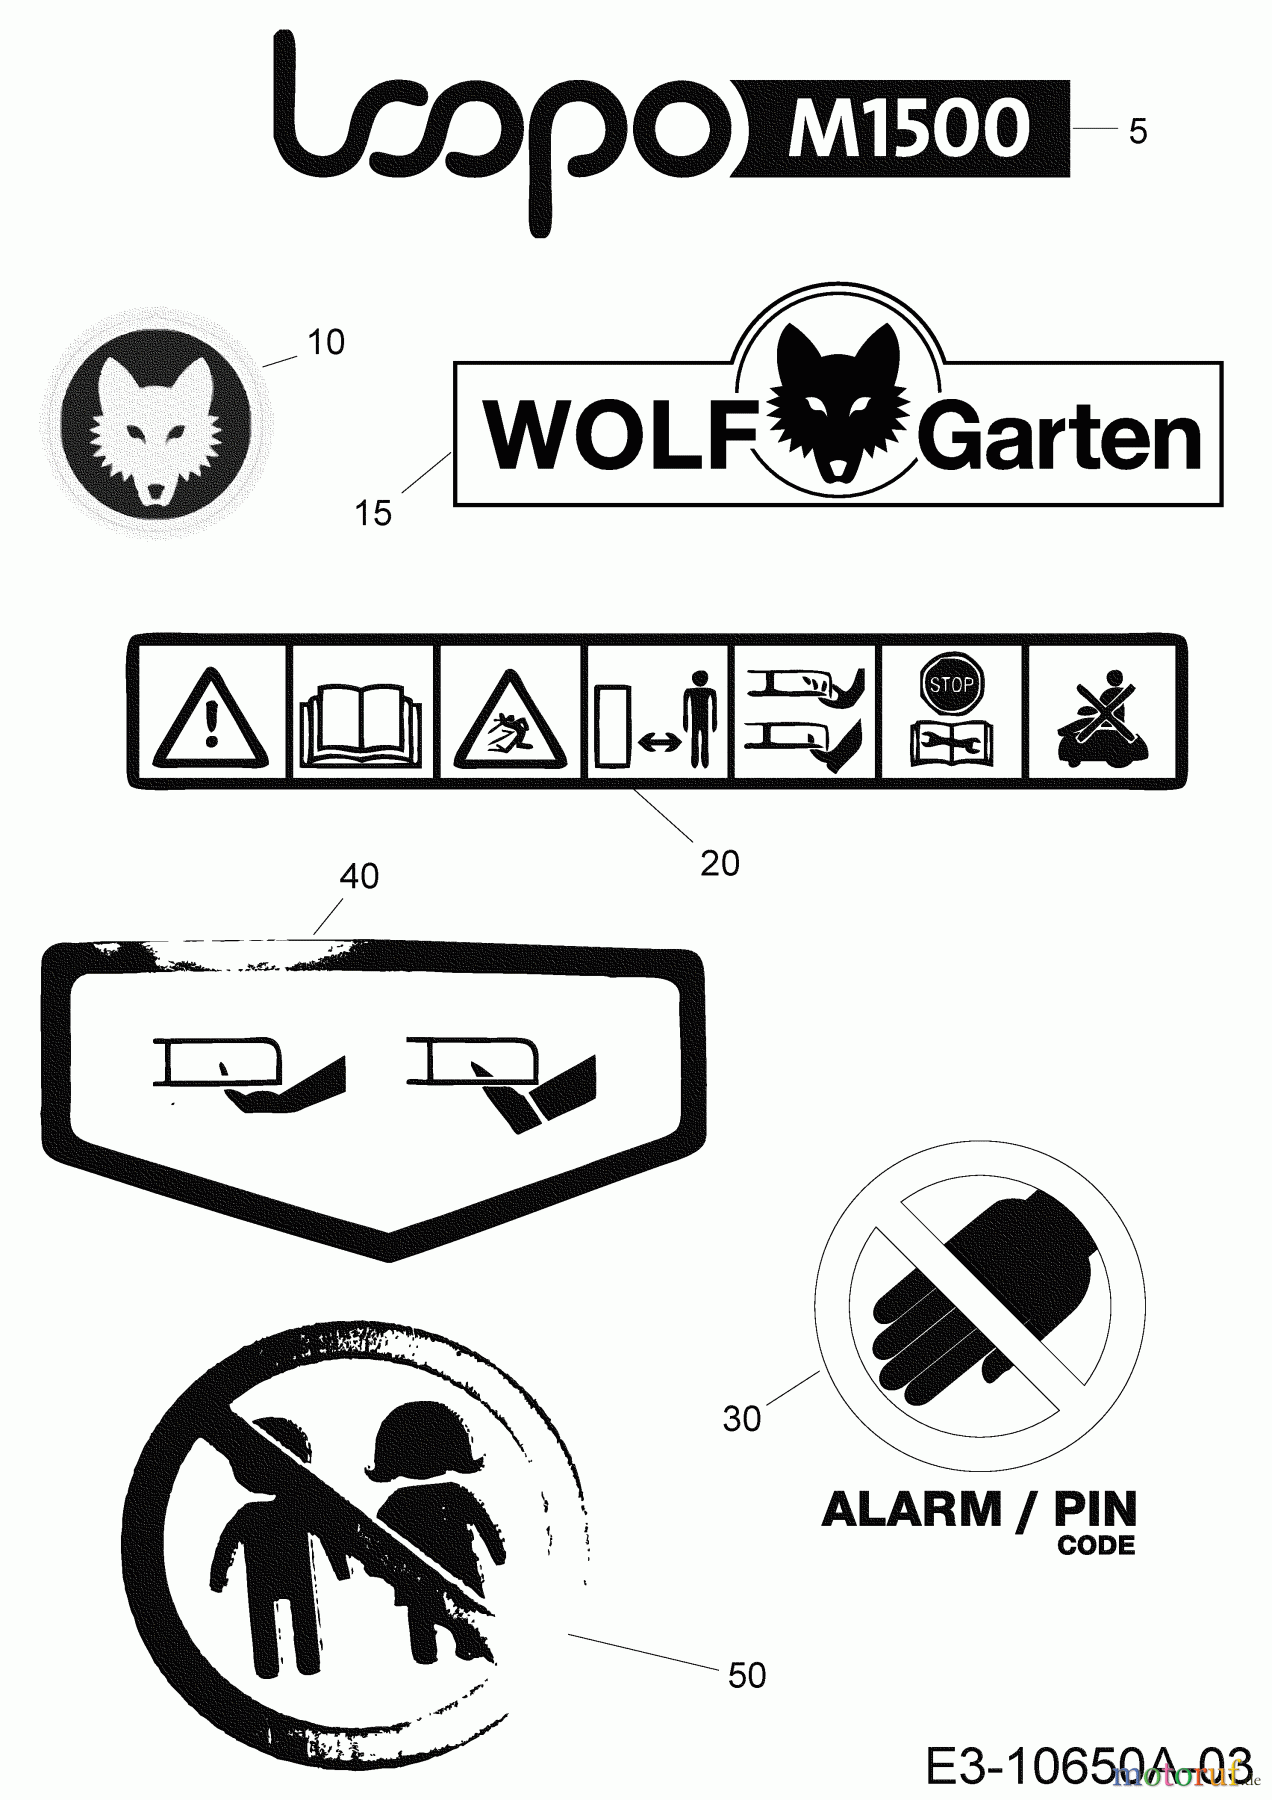  Wolf-Garten Robotic lawn mower Loopo M1500 22BCDAEA650  (2019) Labels